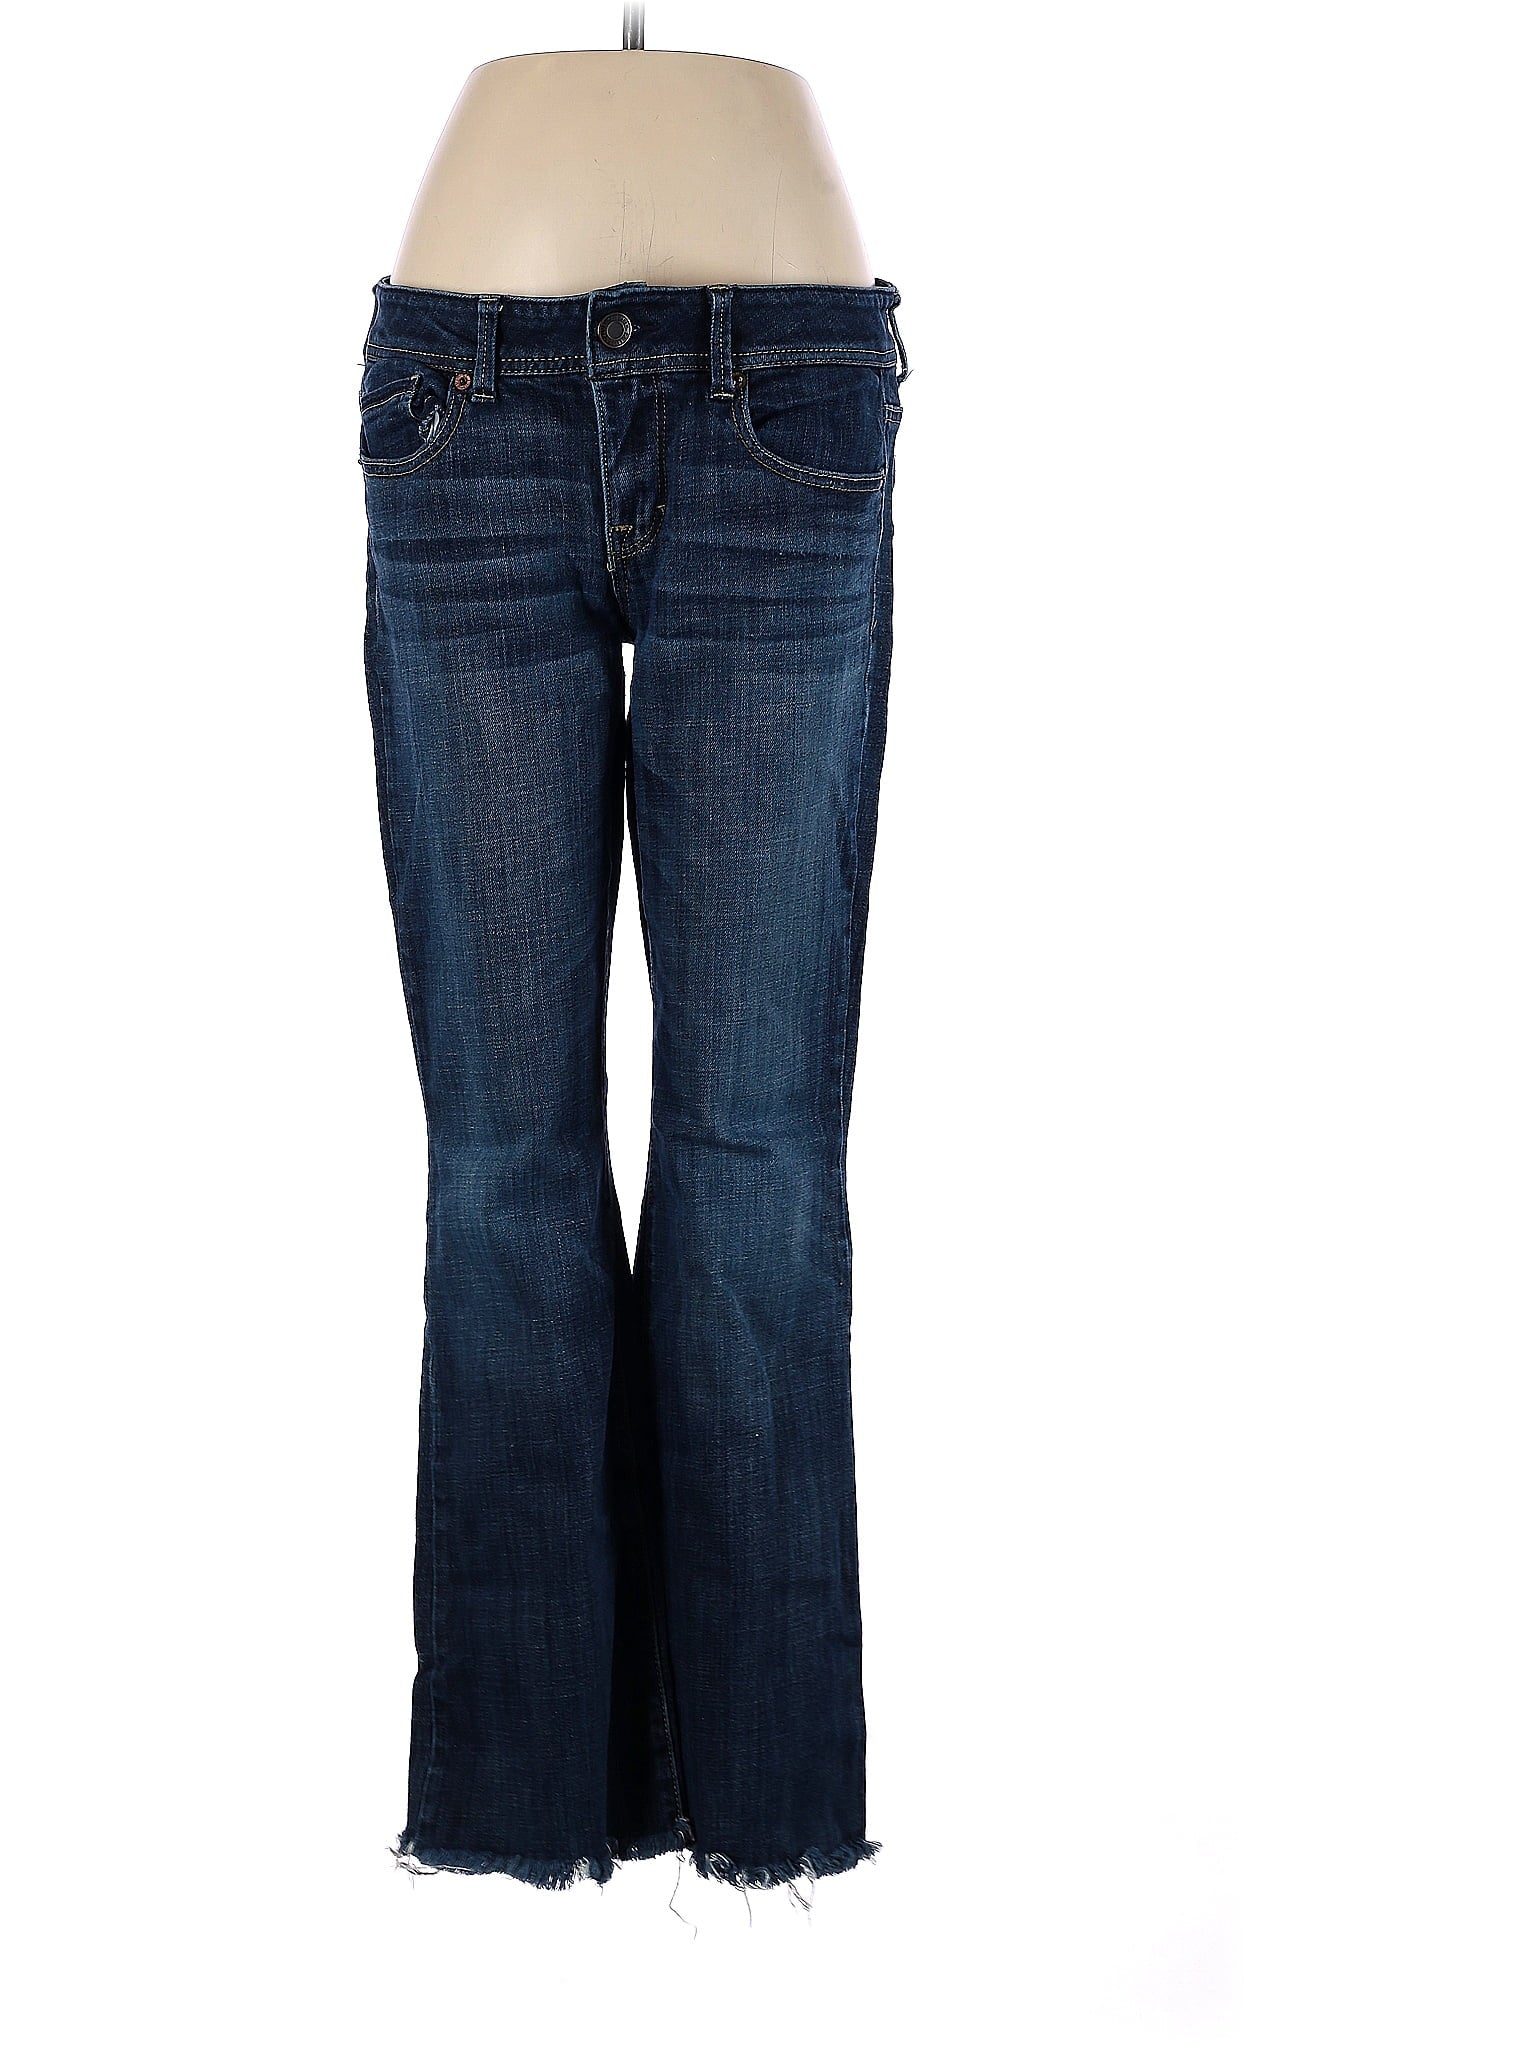 Jeans size - 8